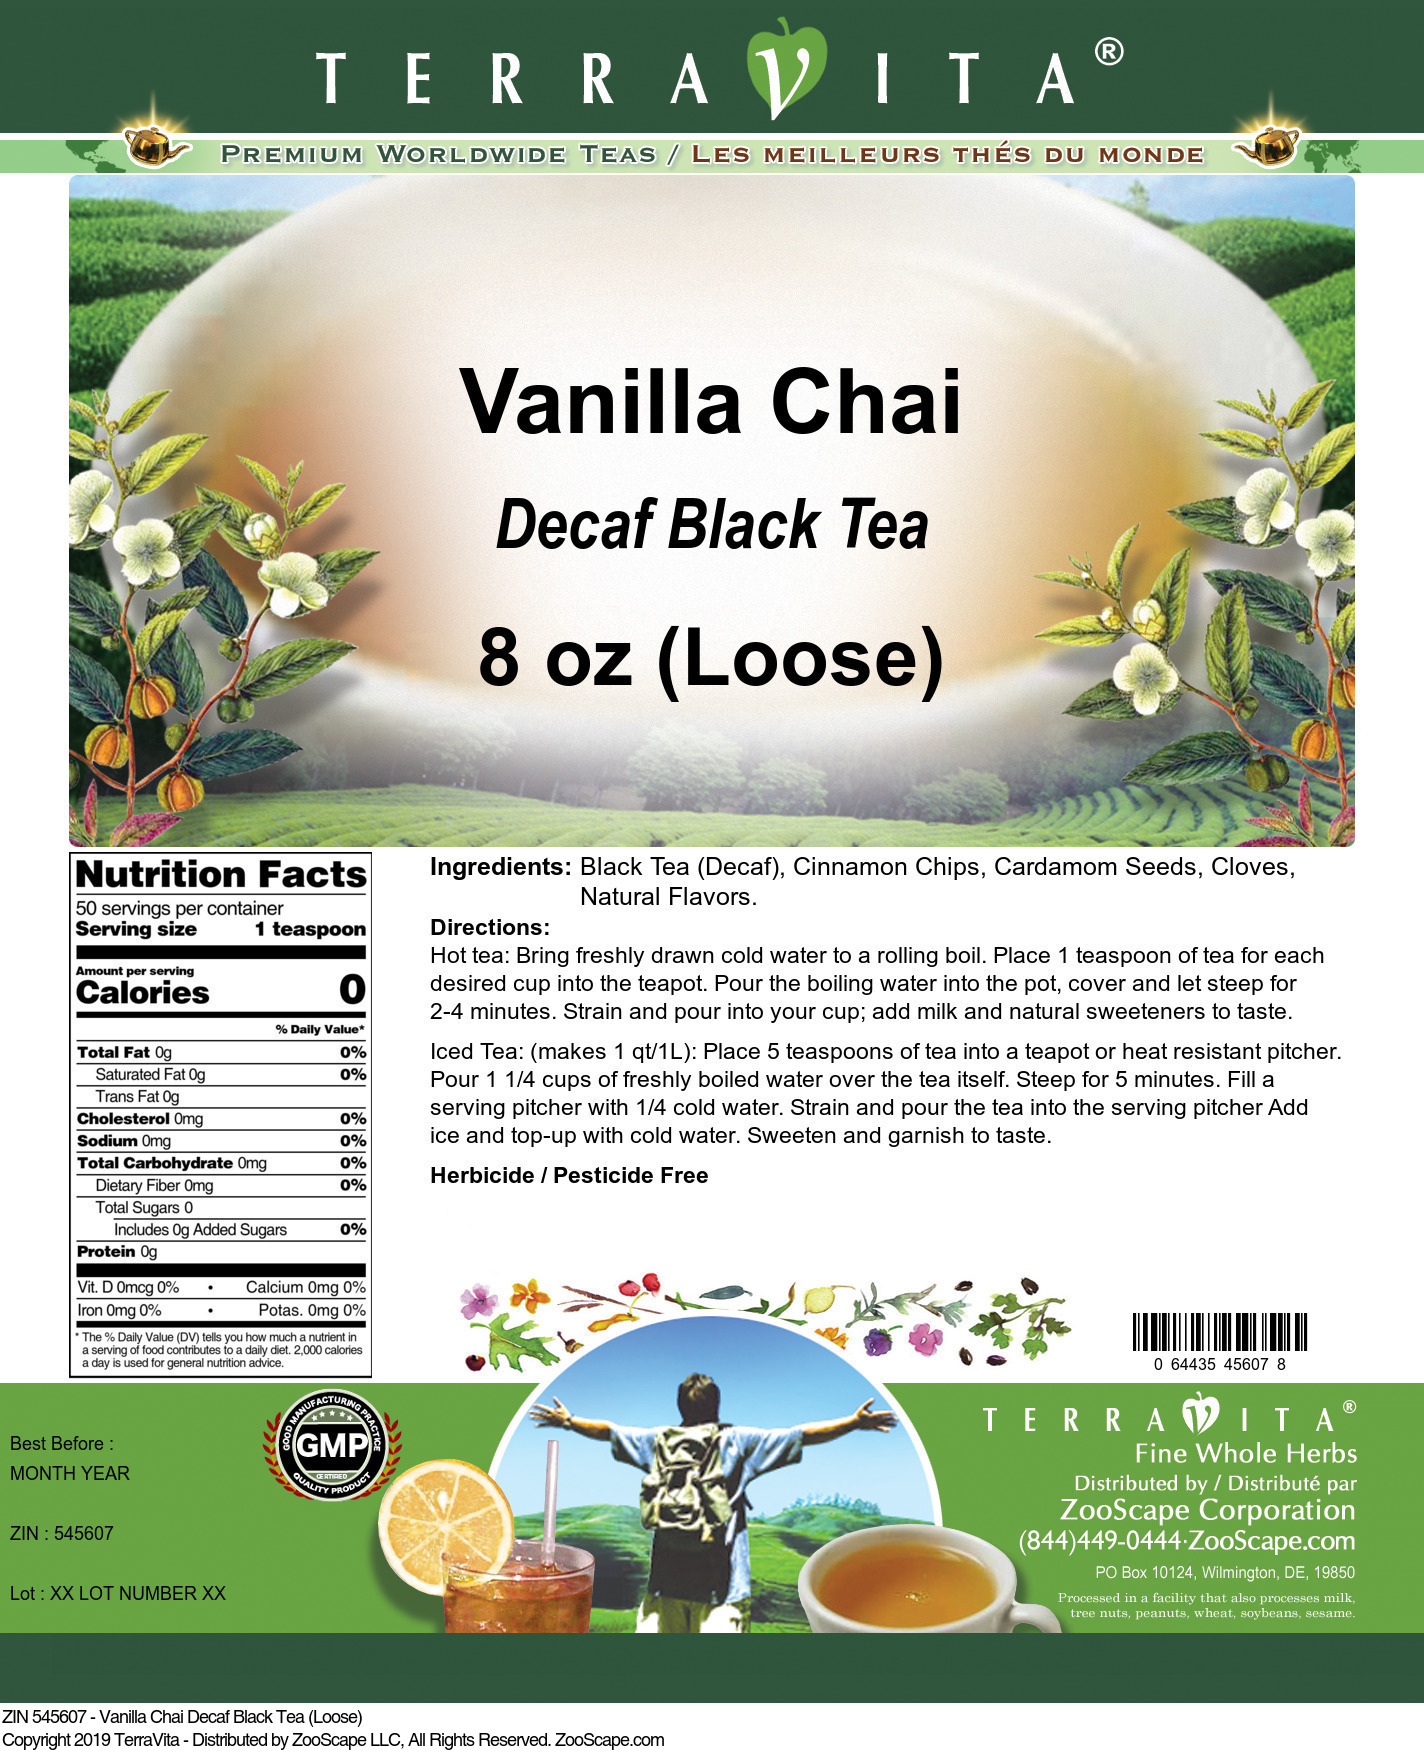 Vanilla Chai Decaf Black Tea (Loose) - Label